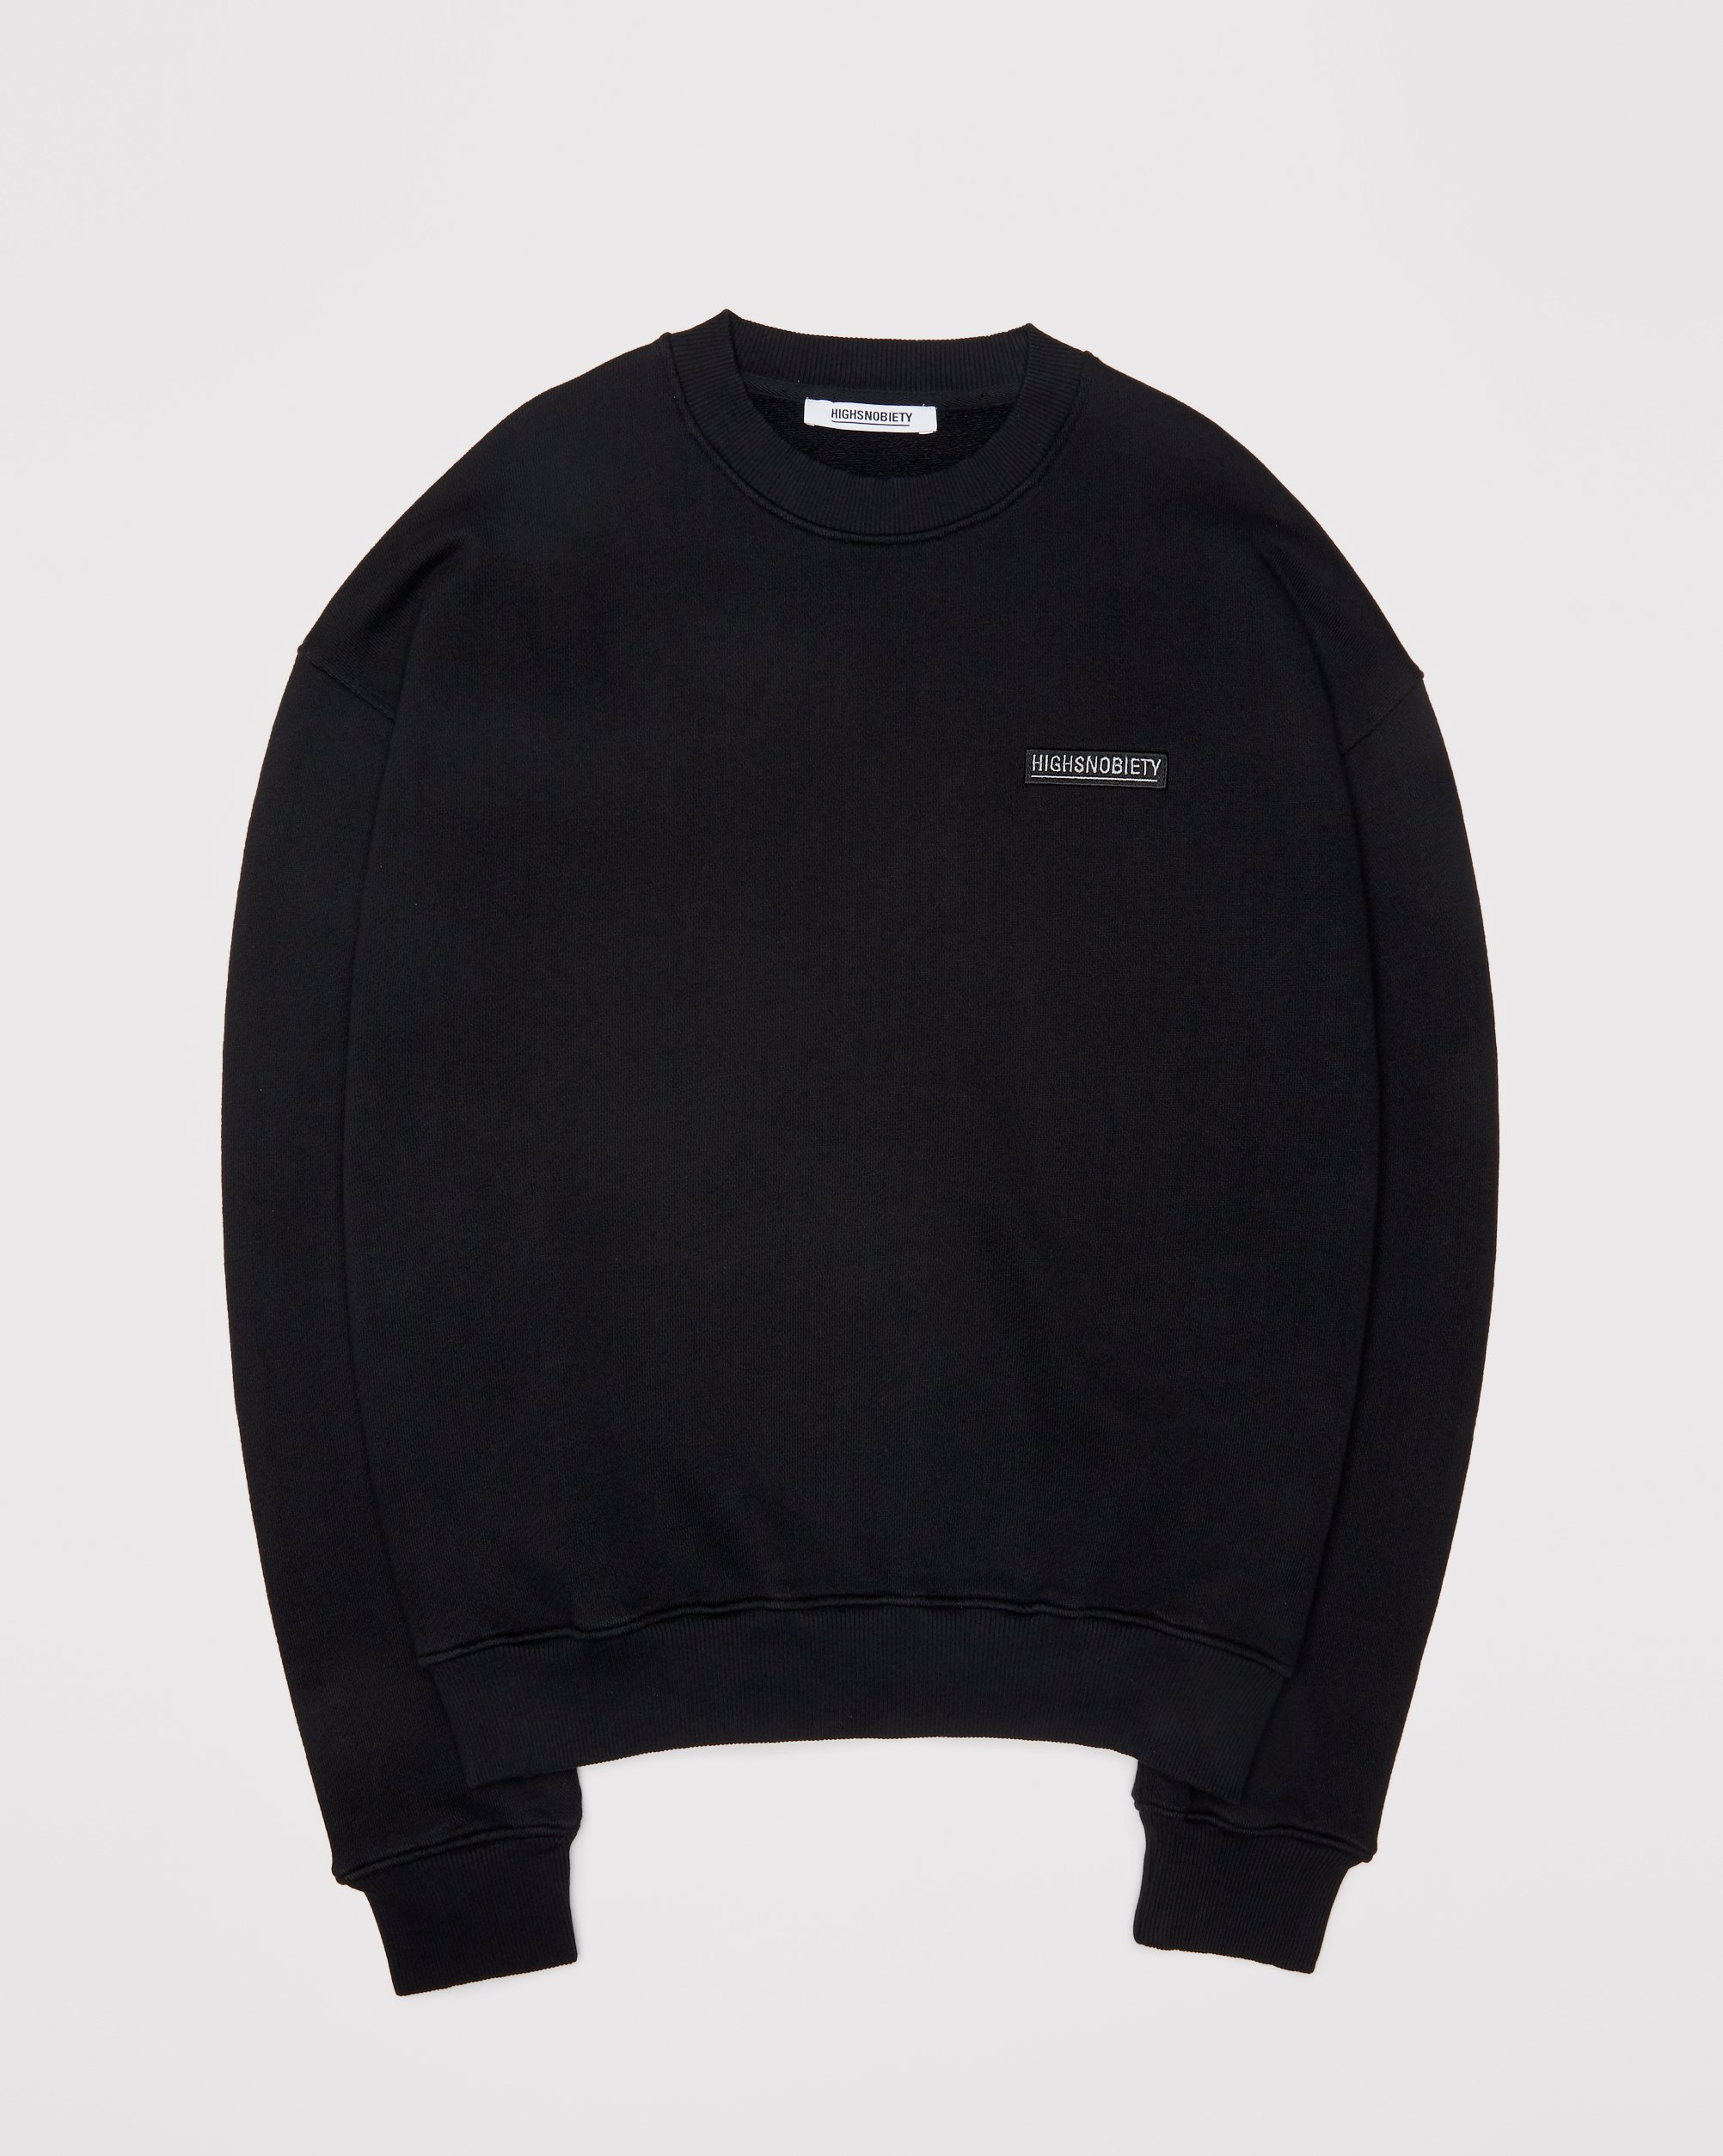 Highsnobiety - Staples Sweatshirt Black - Clothing - Black - Image 1